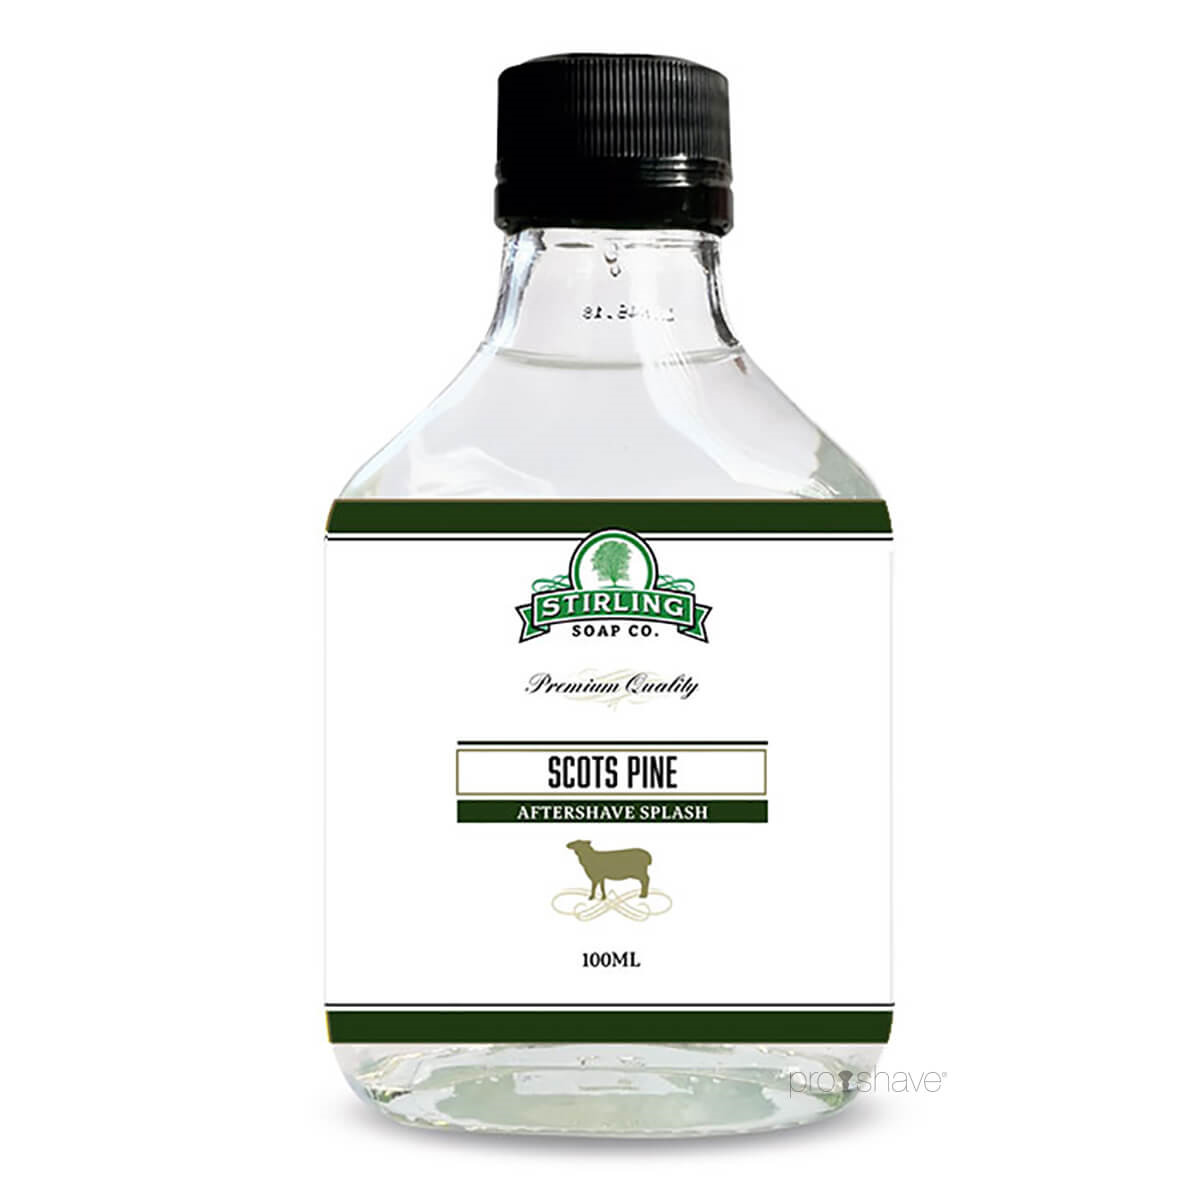 Stirling Soap Co. Aftershave Splash, Scots Pine Sheep, 100 ml.